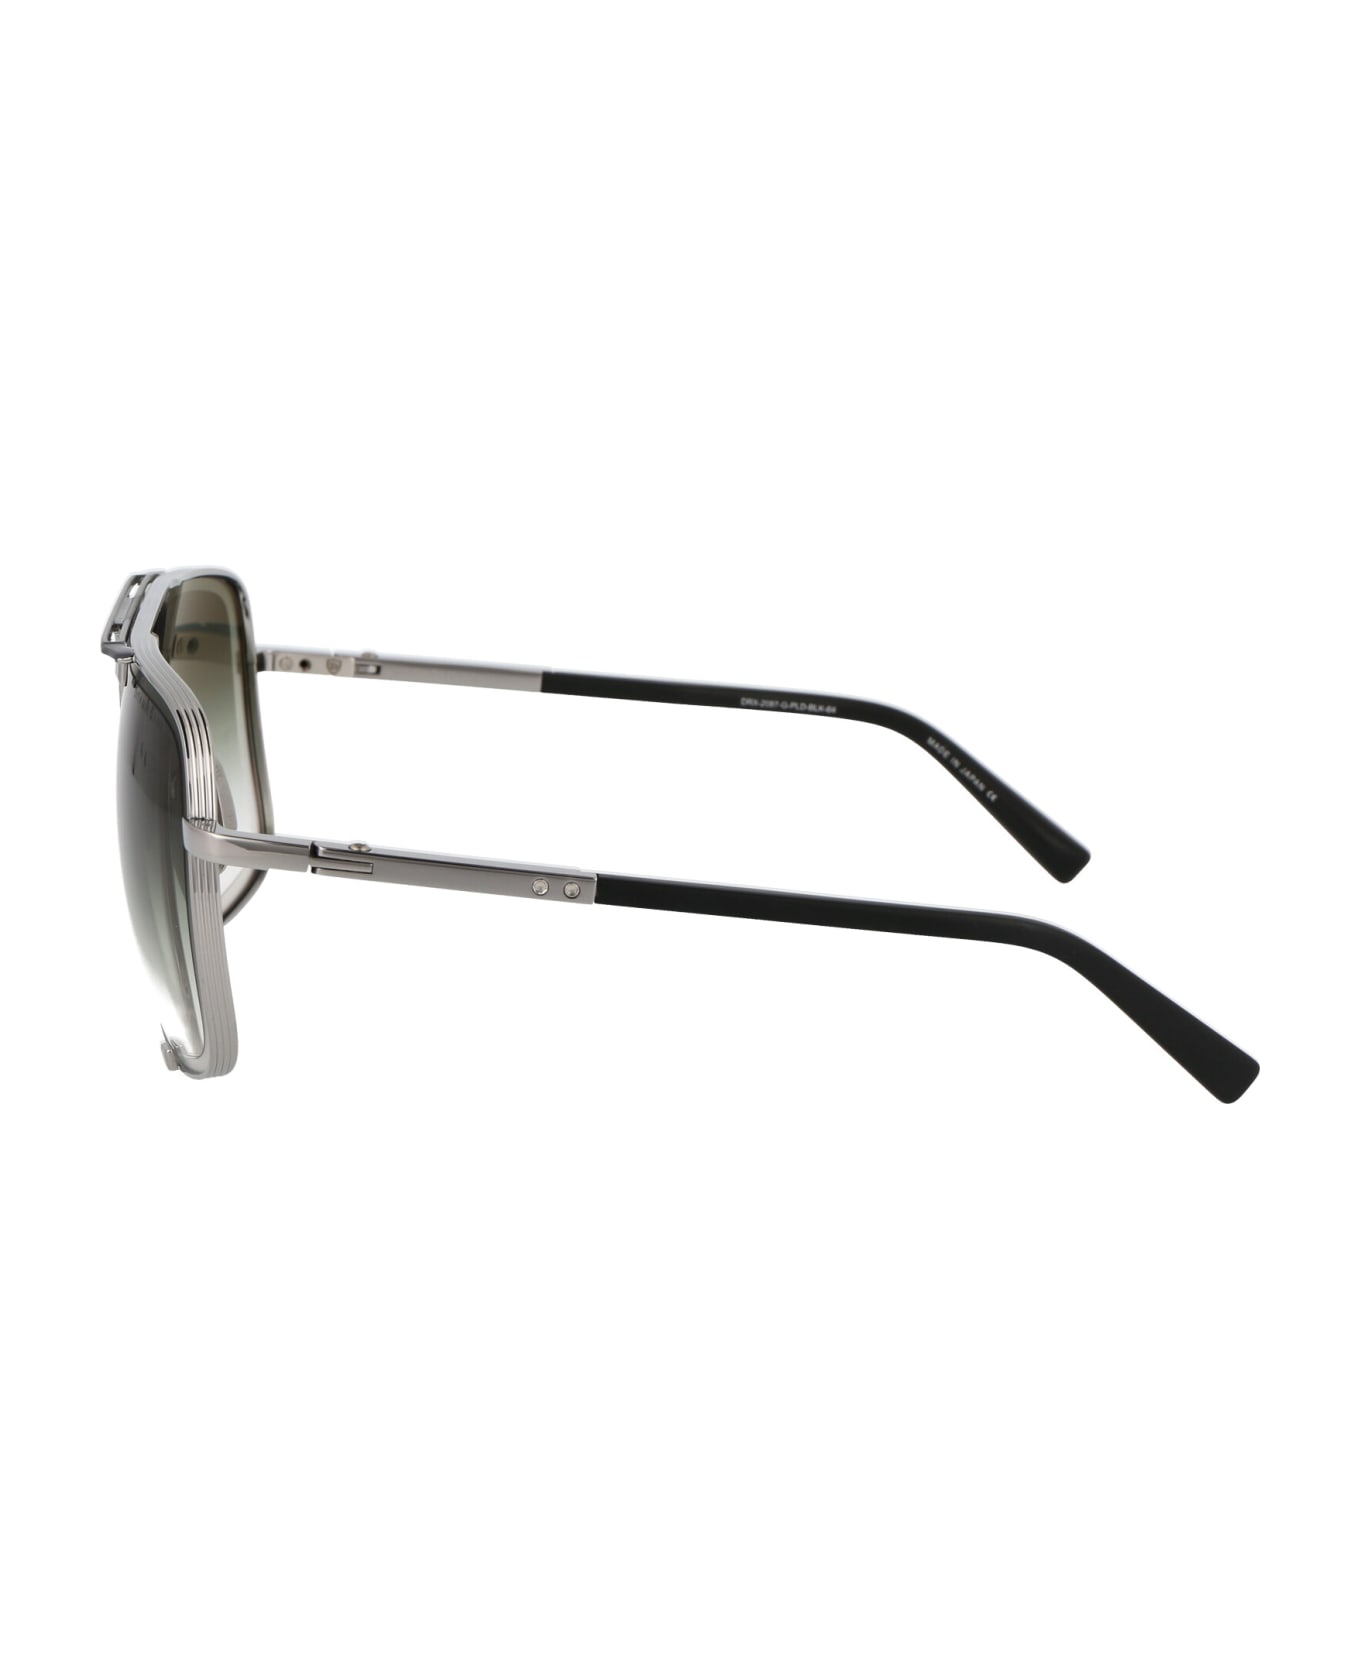 Dita Mach-five Sunglasses - Black Palladium - Black Iron